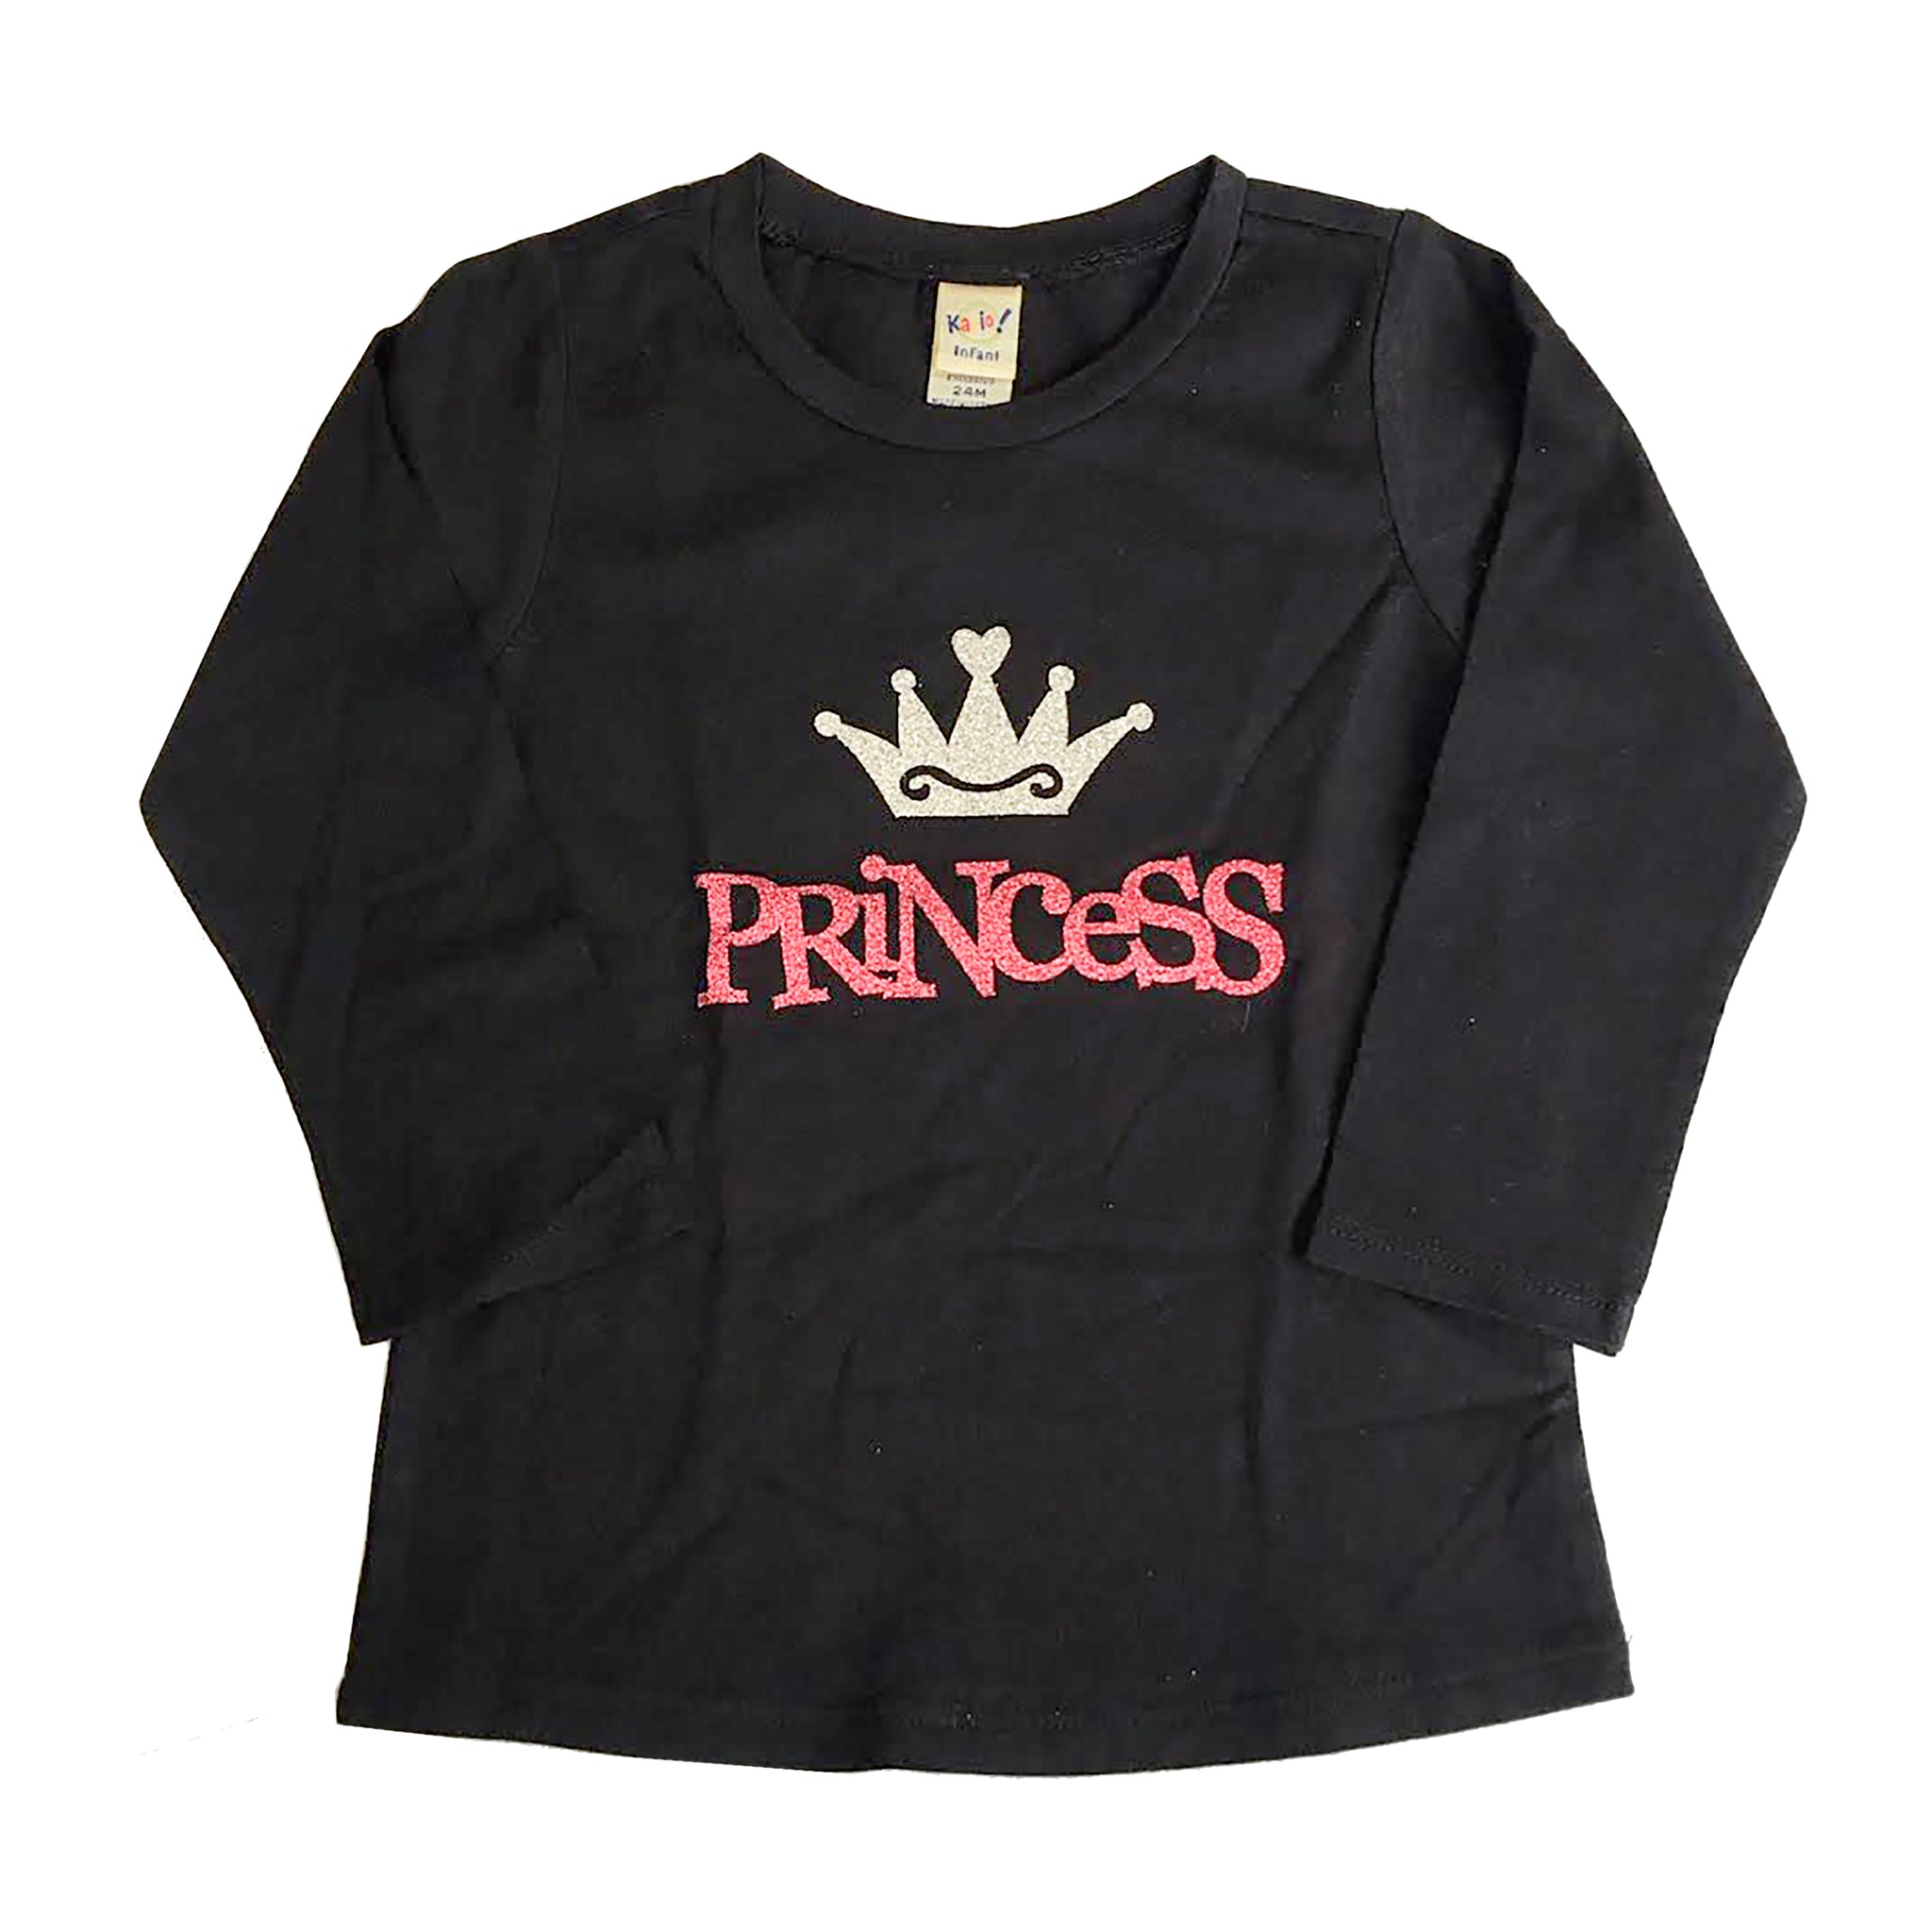 Princess, Put your Crown On! T-shirt black long sleeve